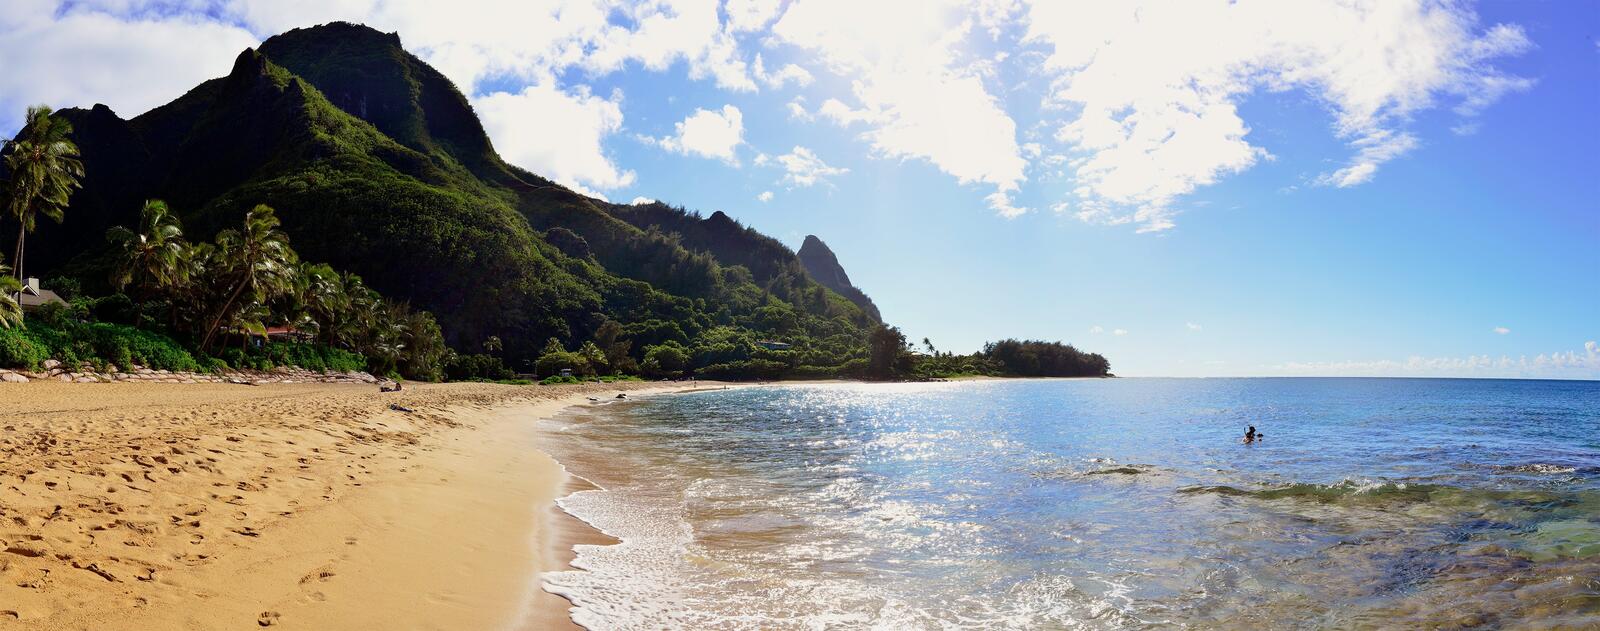 Free photo Tropical Beach in Hawaii